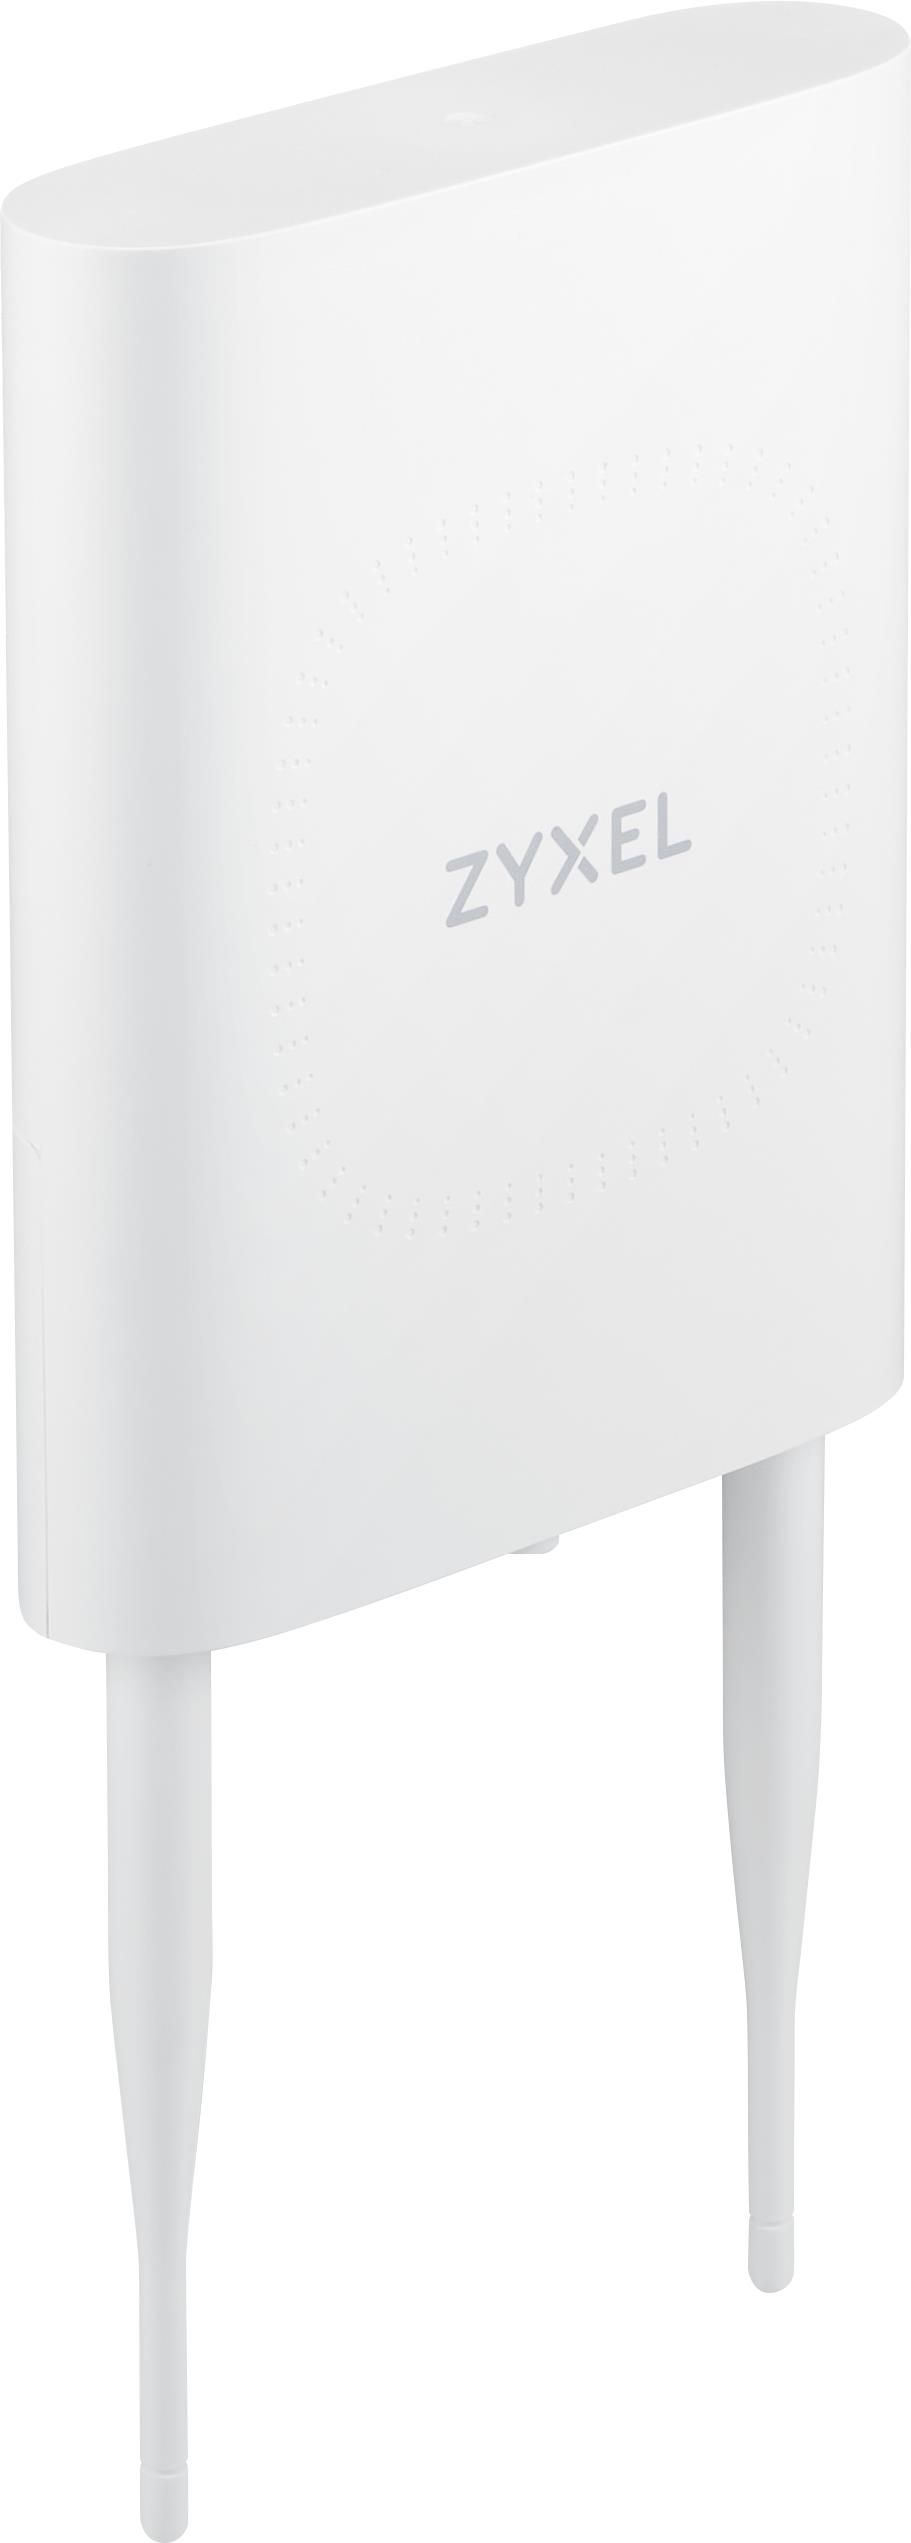 Zyxel NWA55AXE Wireless Access